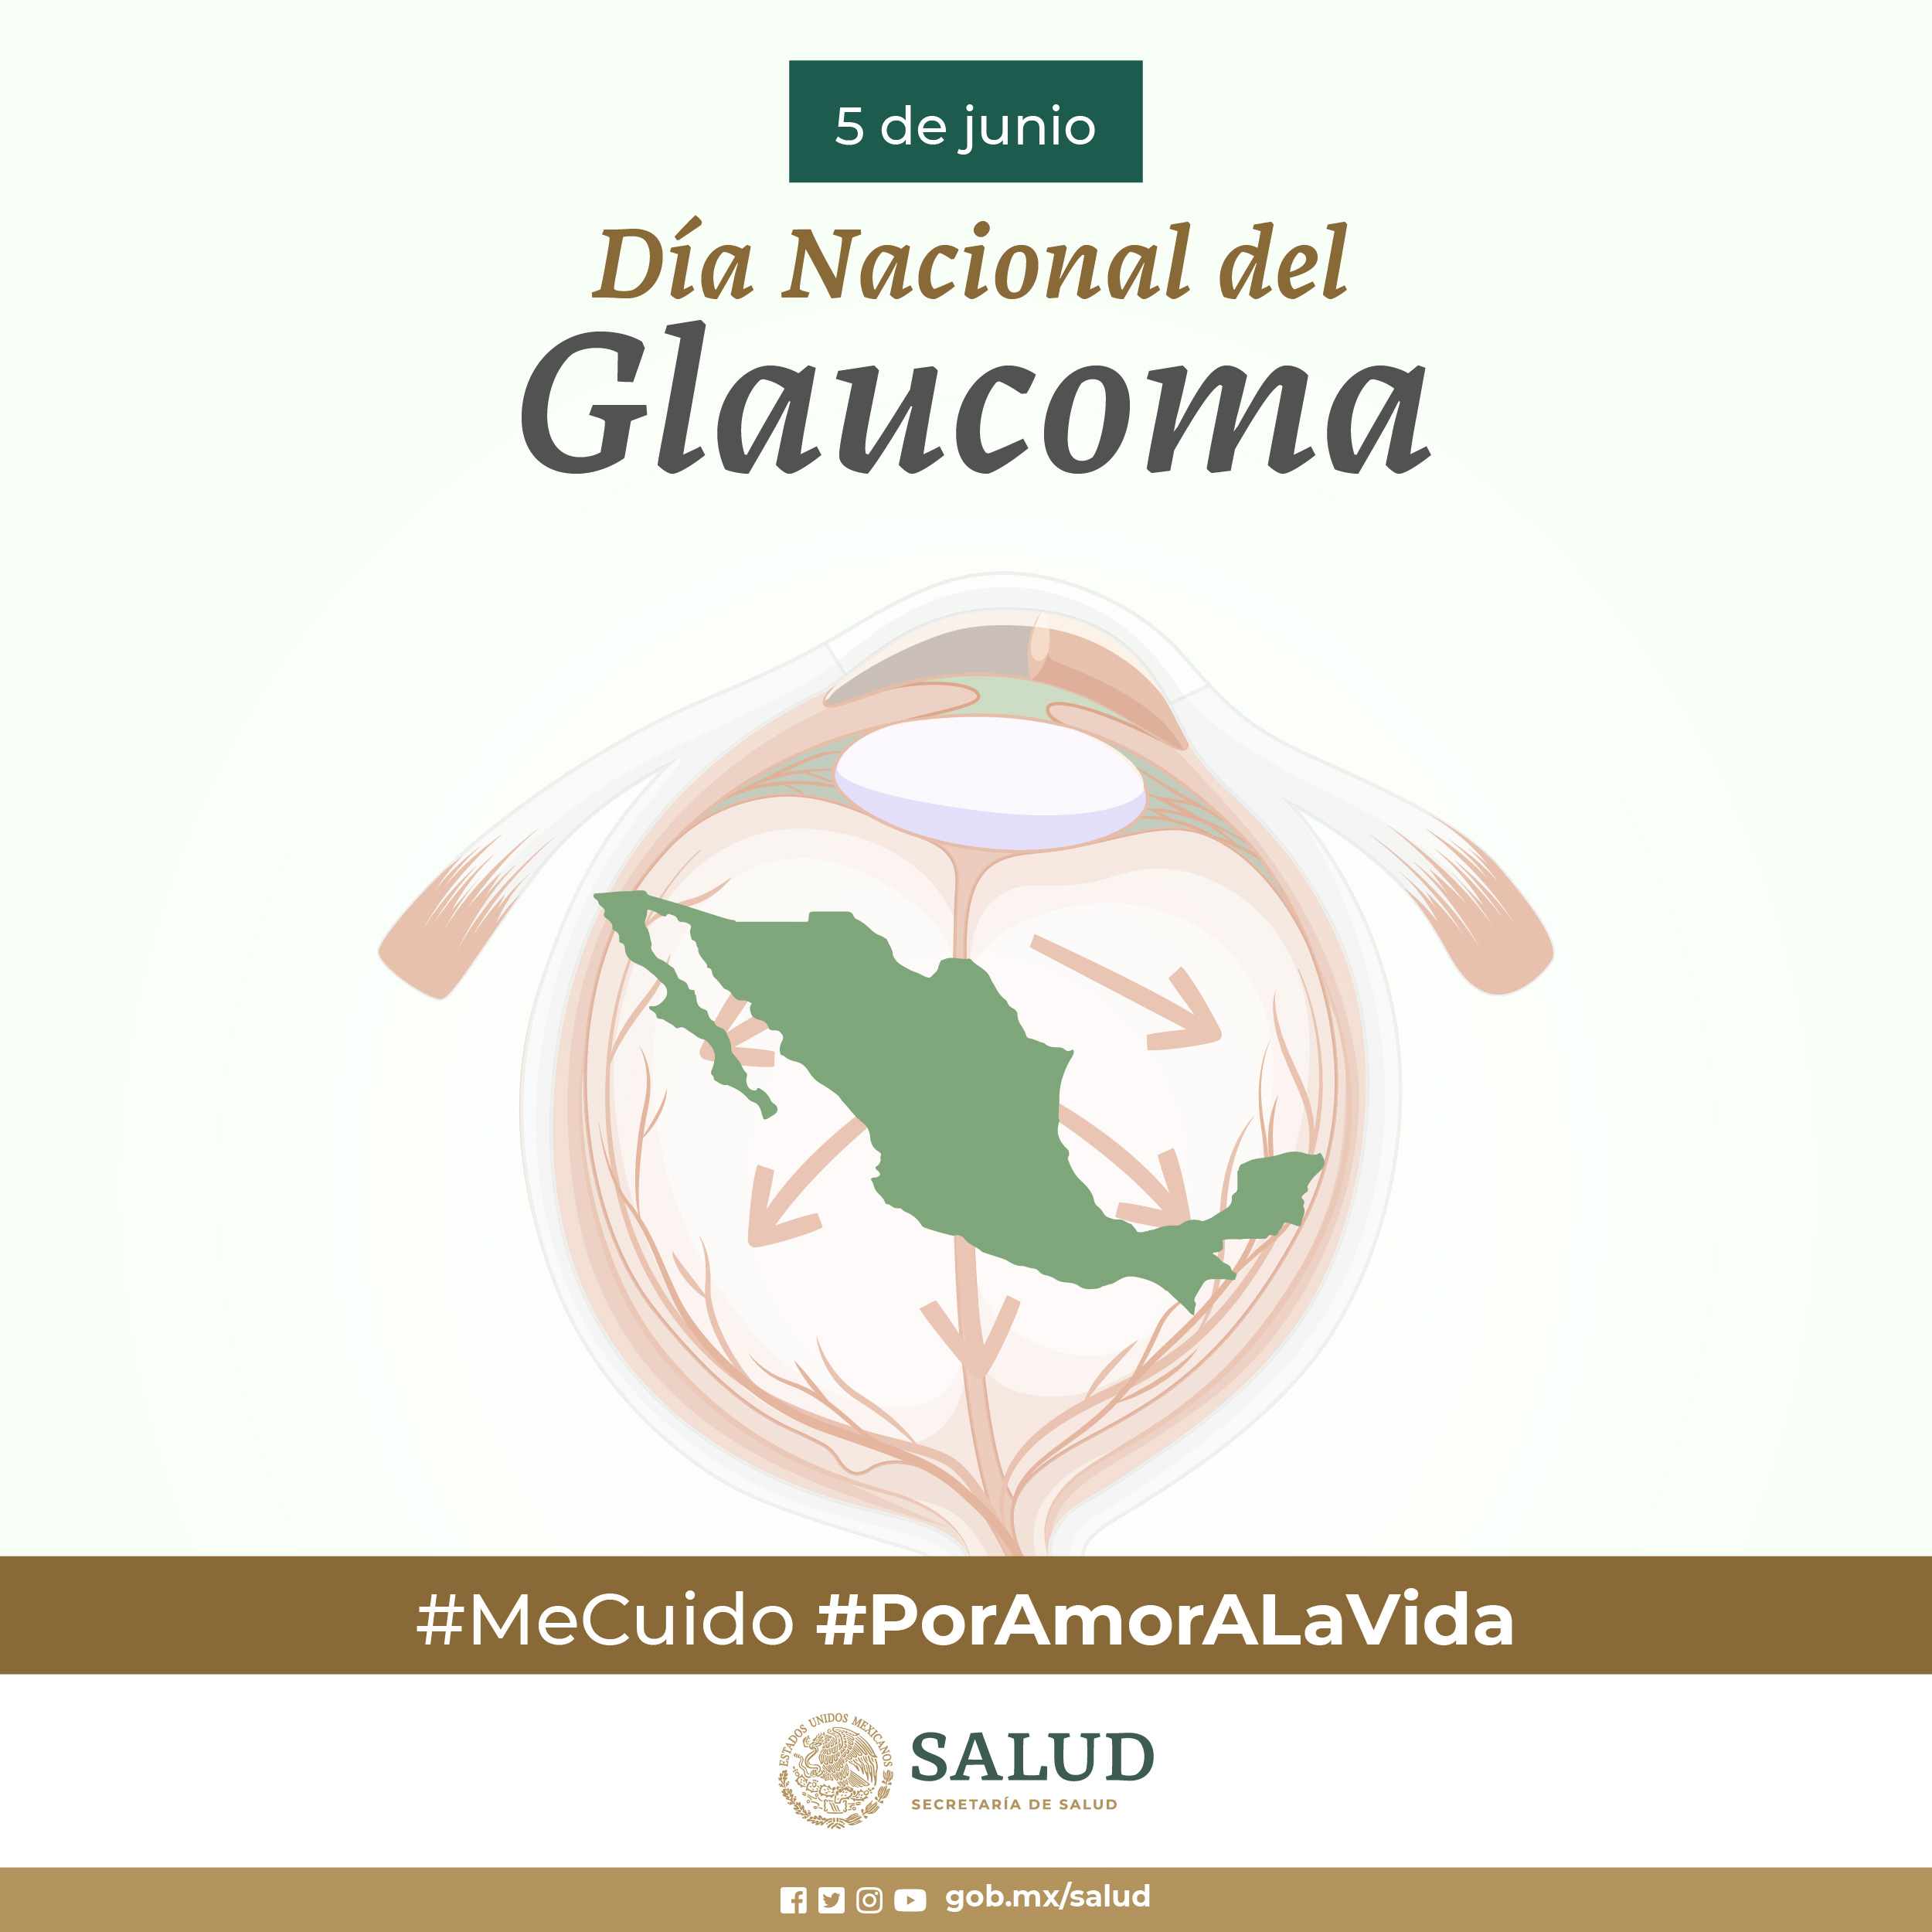 /cms/uploads/image/file/652479/05_D_a_Nacional_del_glucoma-01.jpg